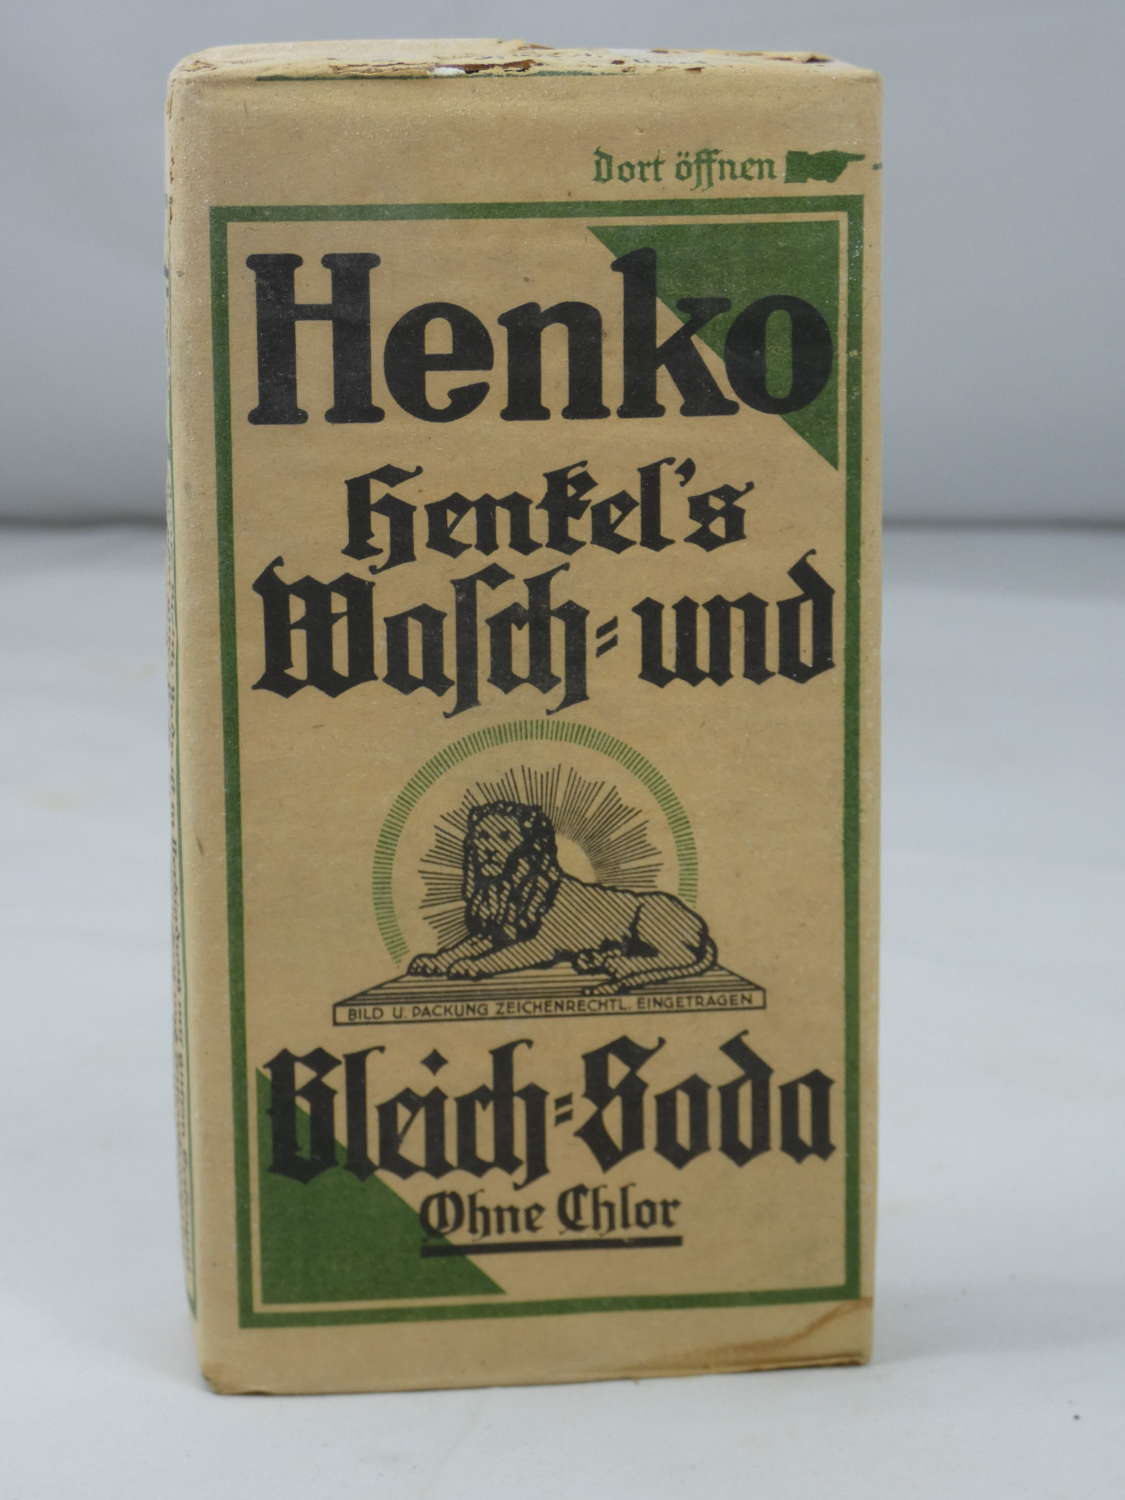 WW2 German Henko Soda With Contents